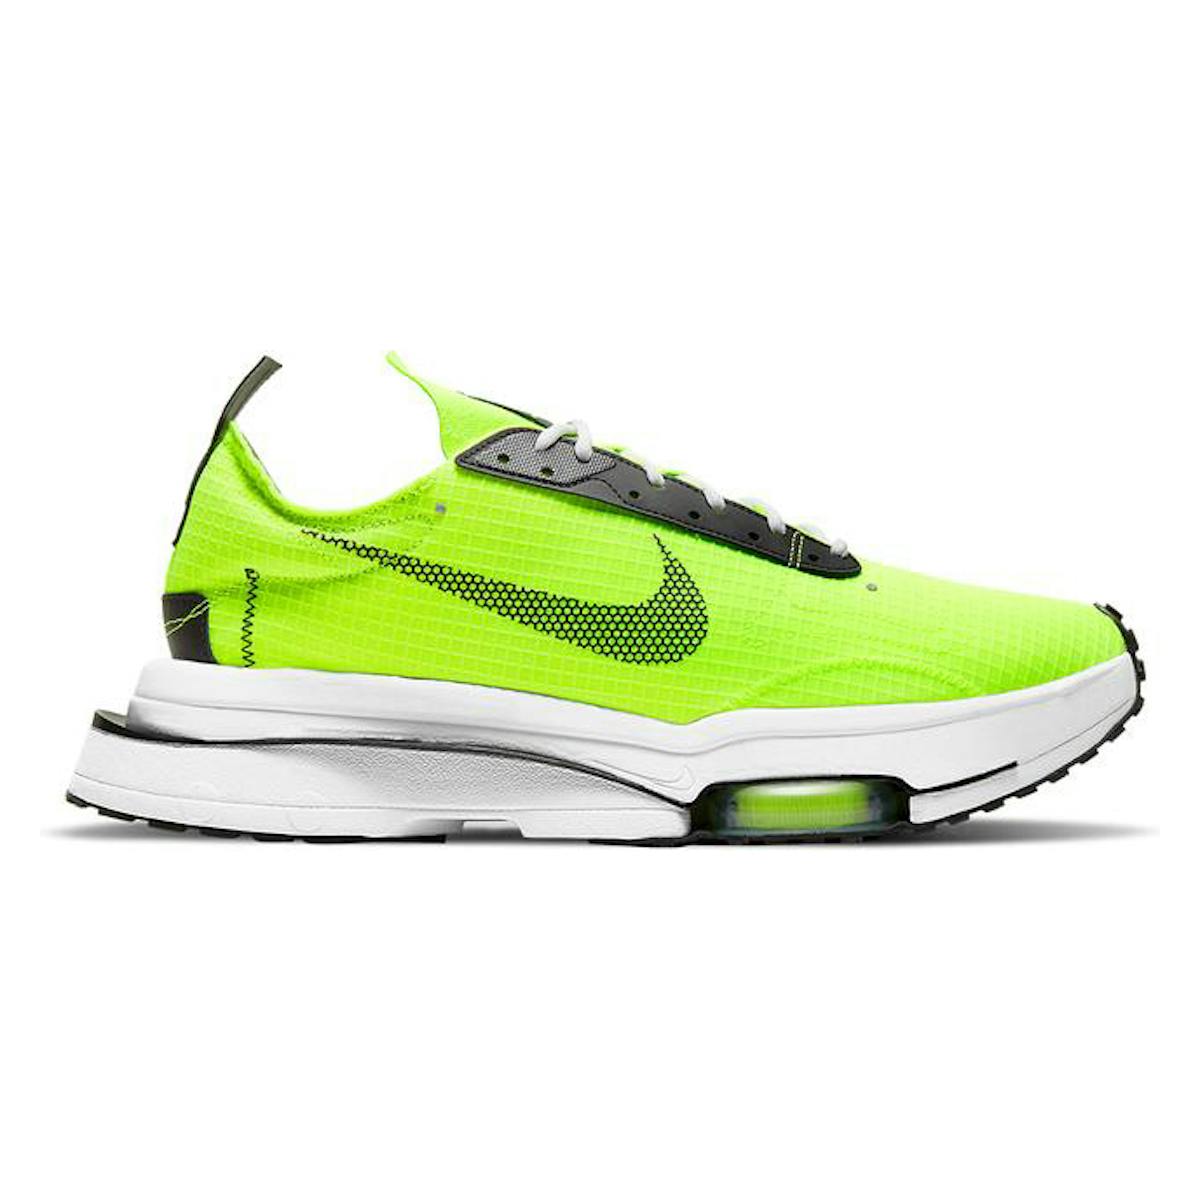 Nike Air Zoom Type Volt